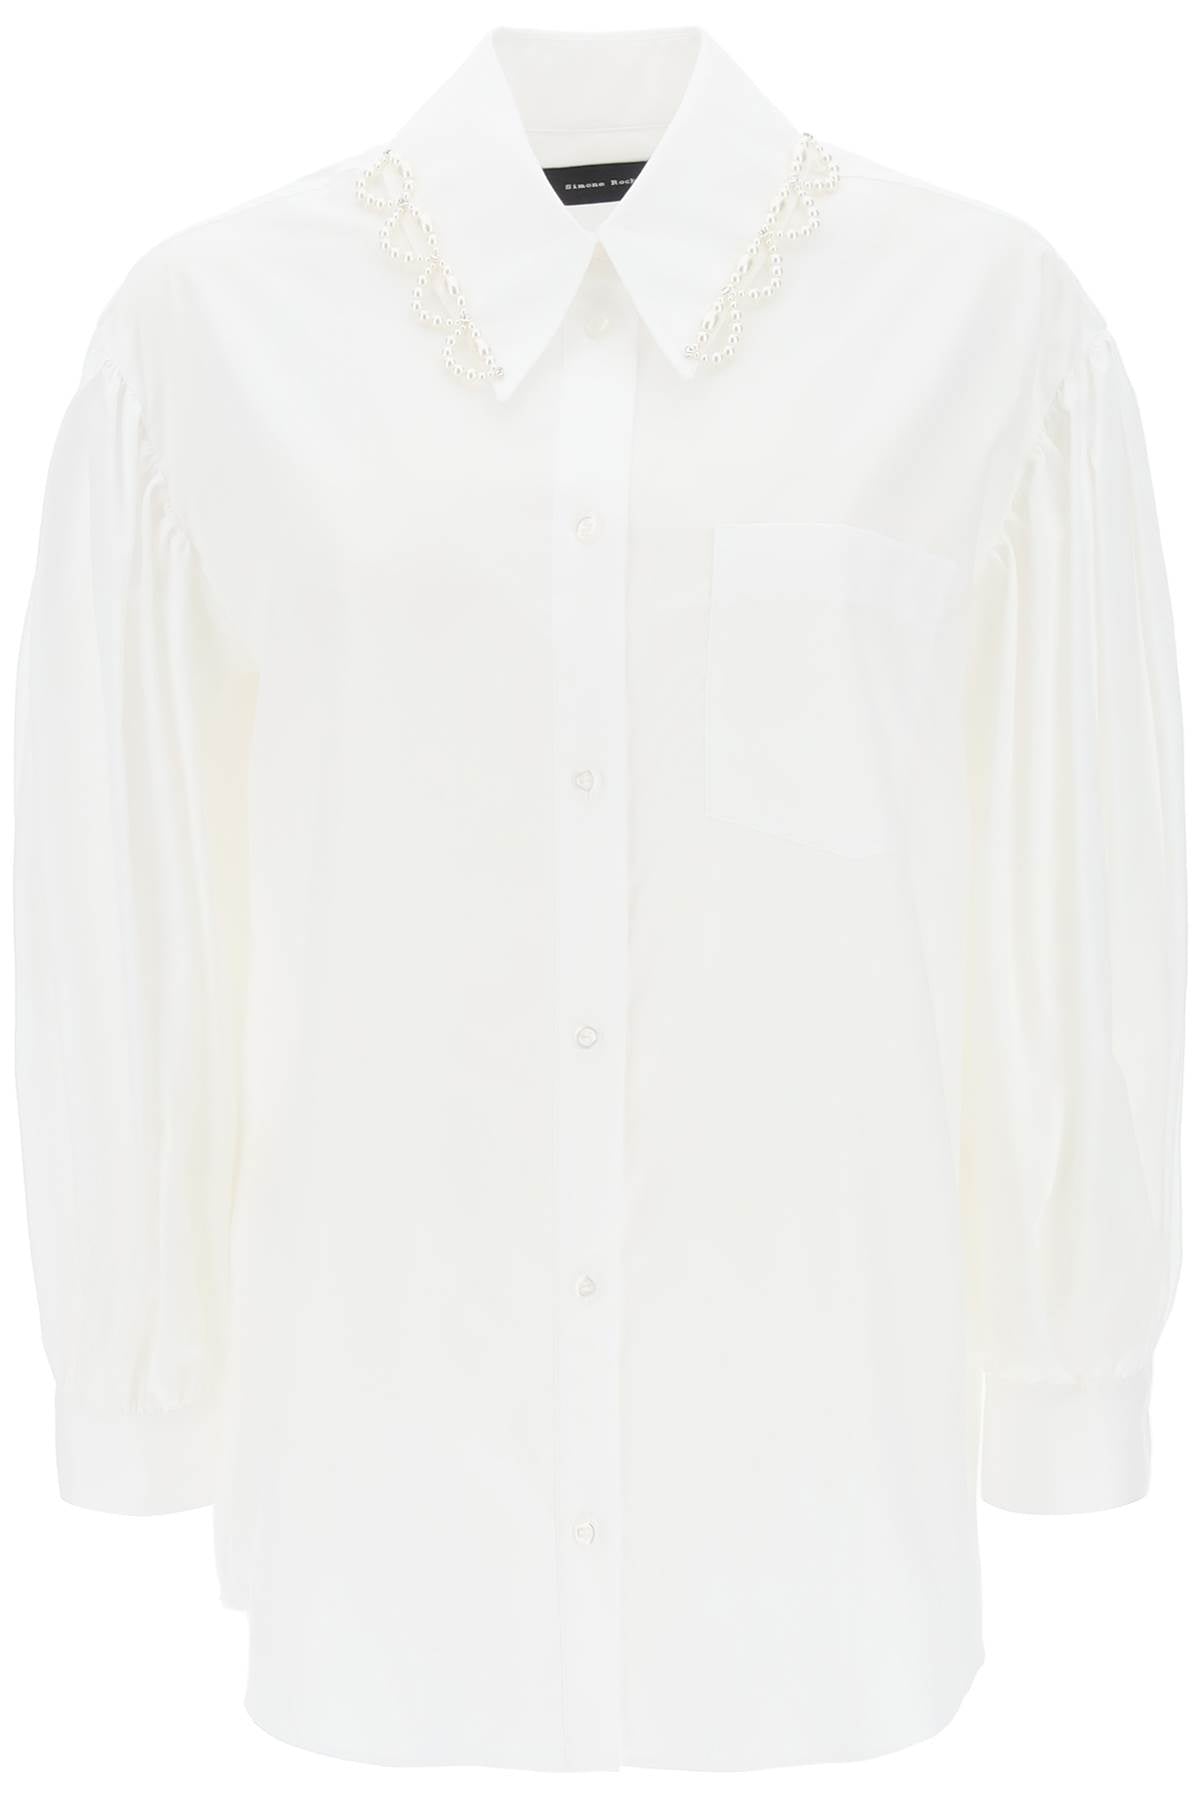 Elegant Puff Sleeve Shirt in White with Embellishments